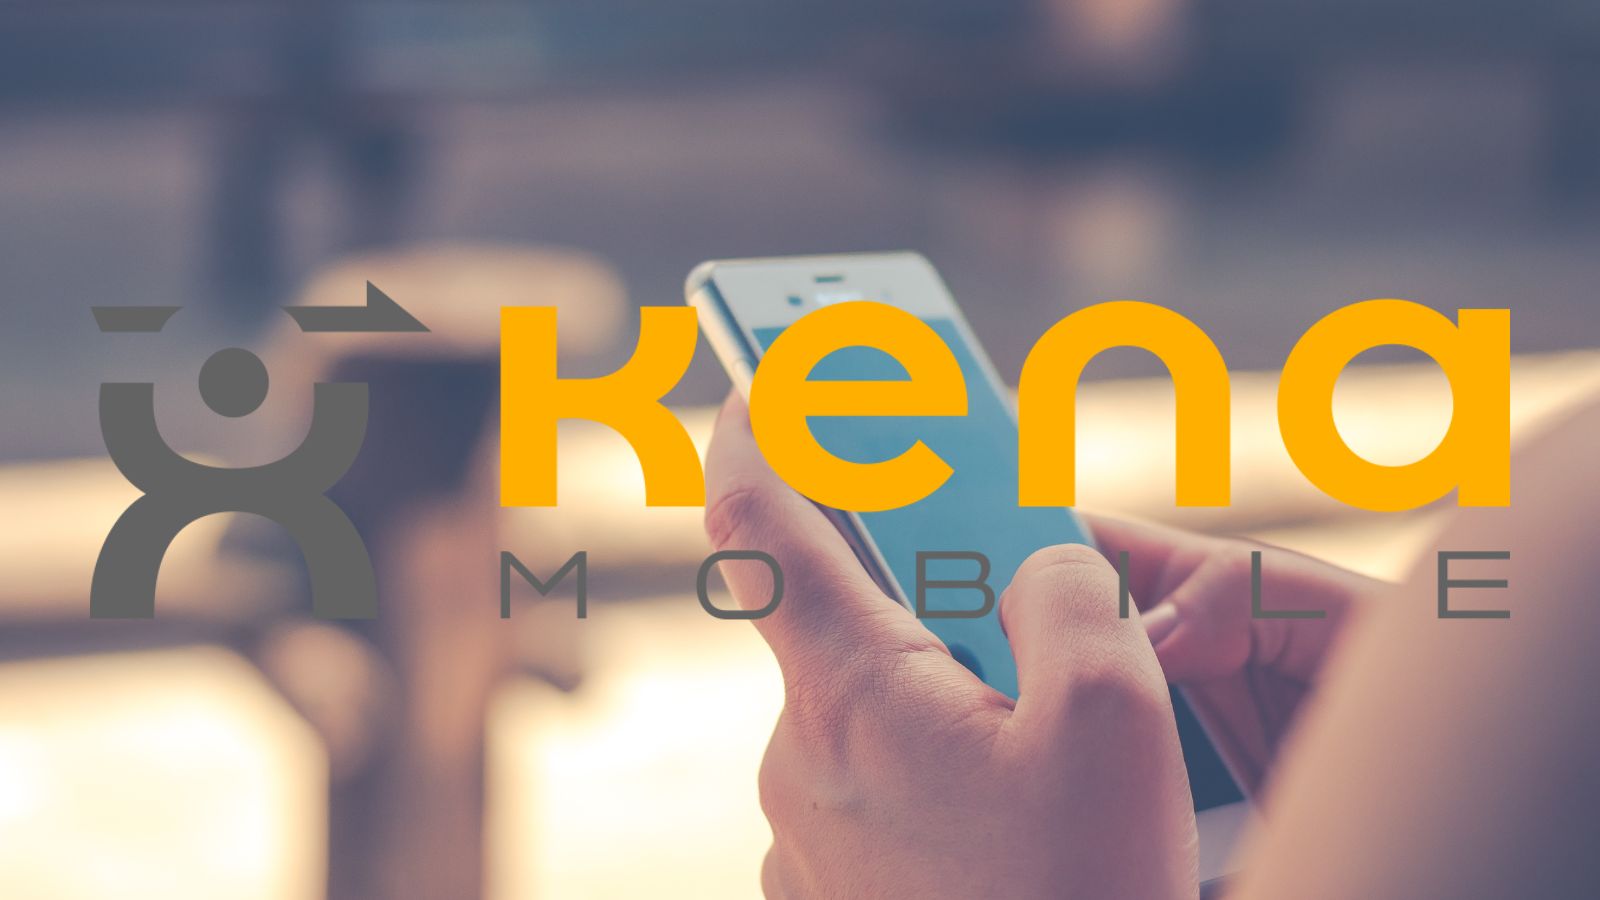 Kena Mobile è IMPAZZITA e regala un'offerta da 100 giga al mese